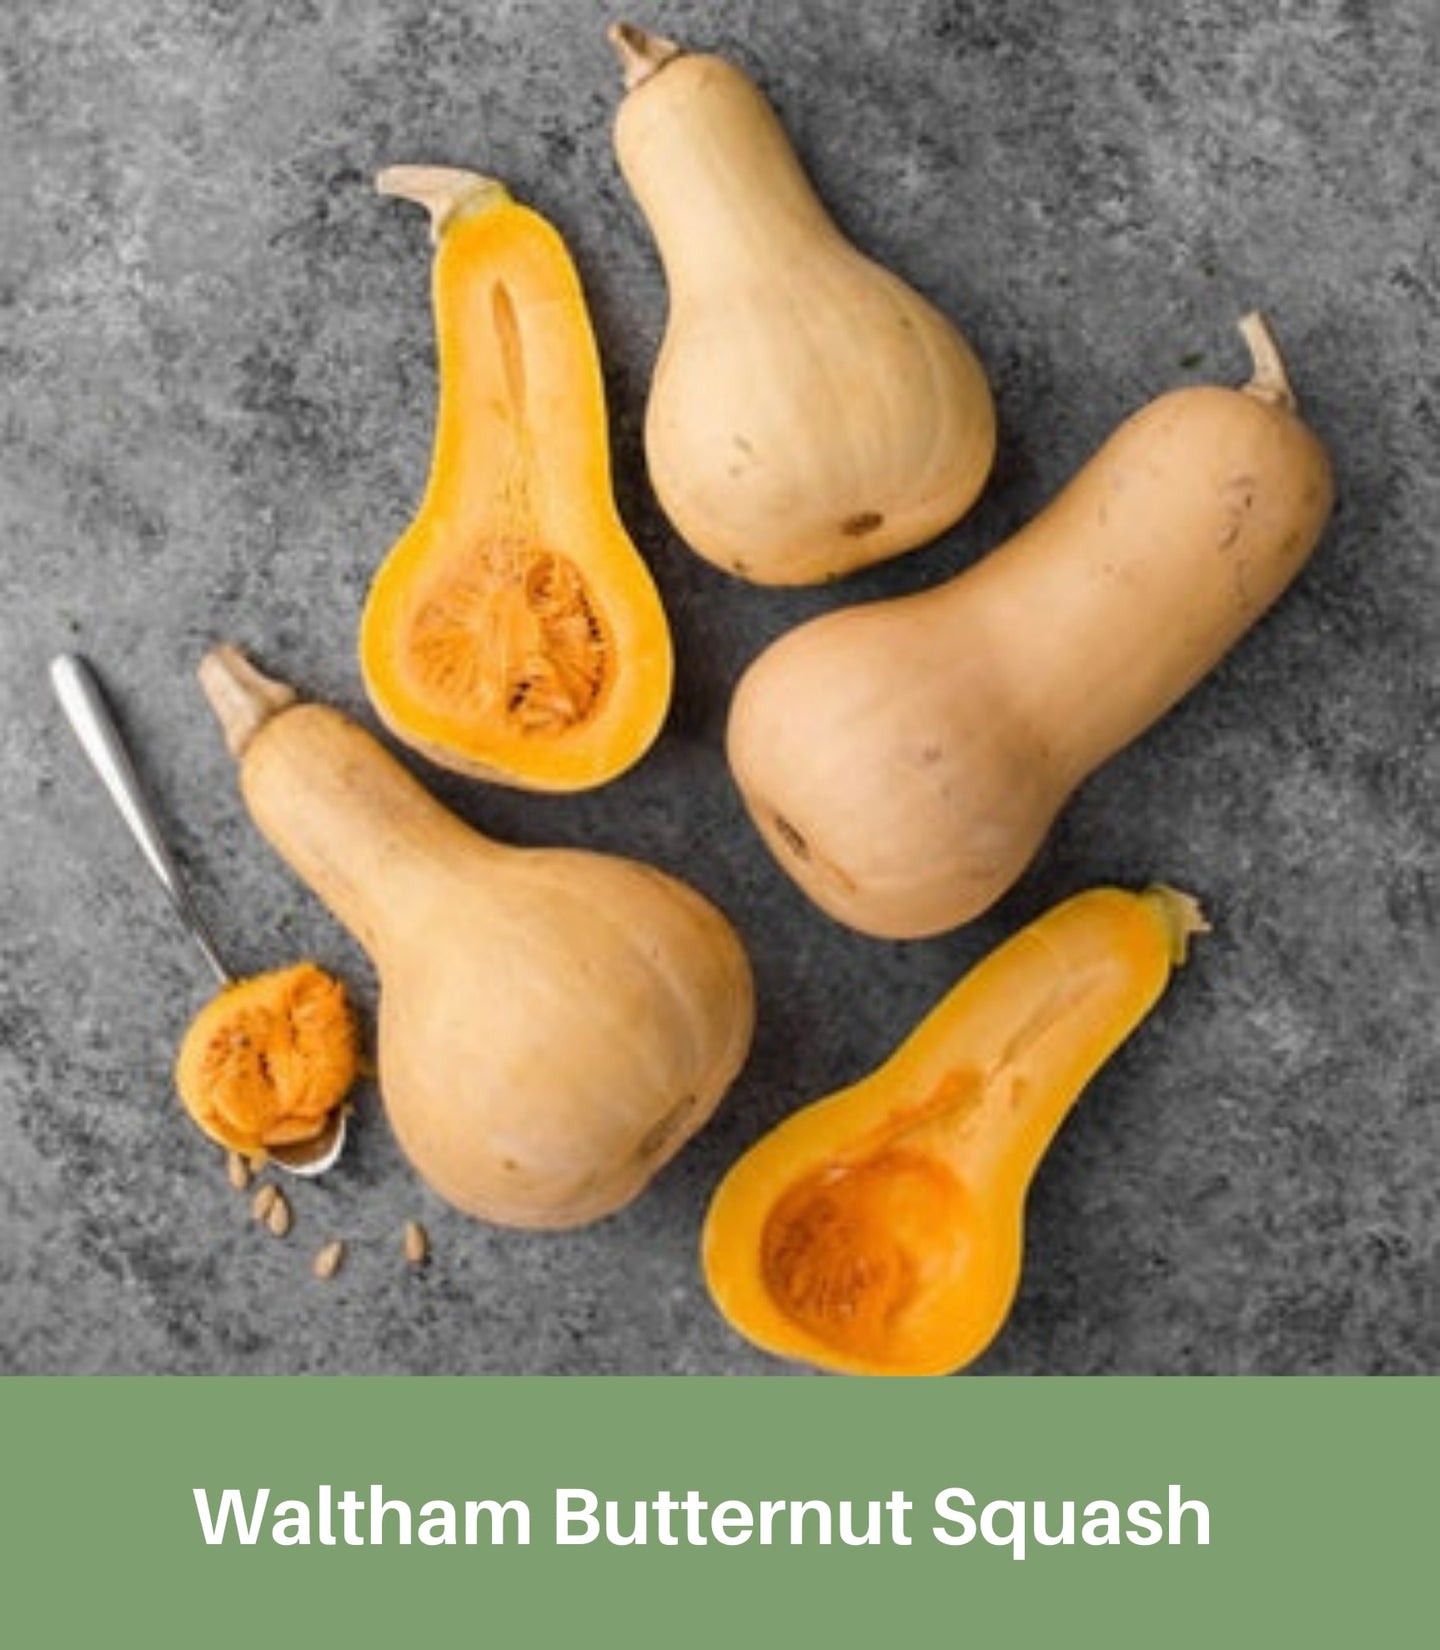 Waltham Butternut Squash Seeds,